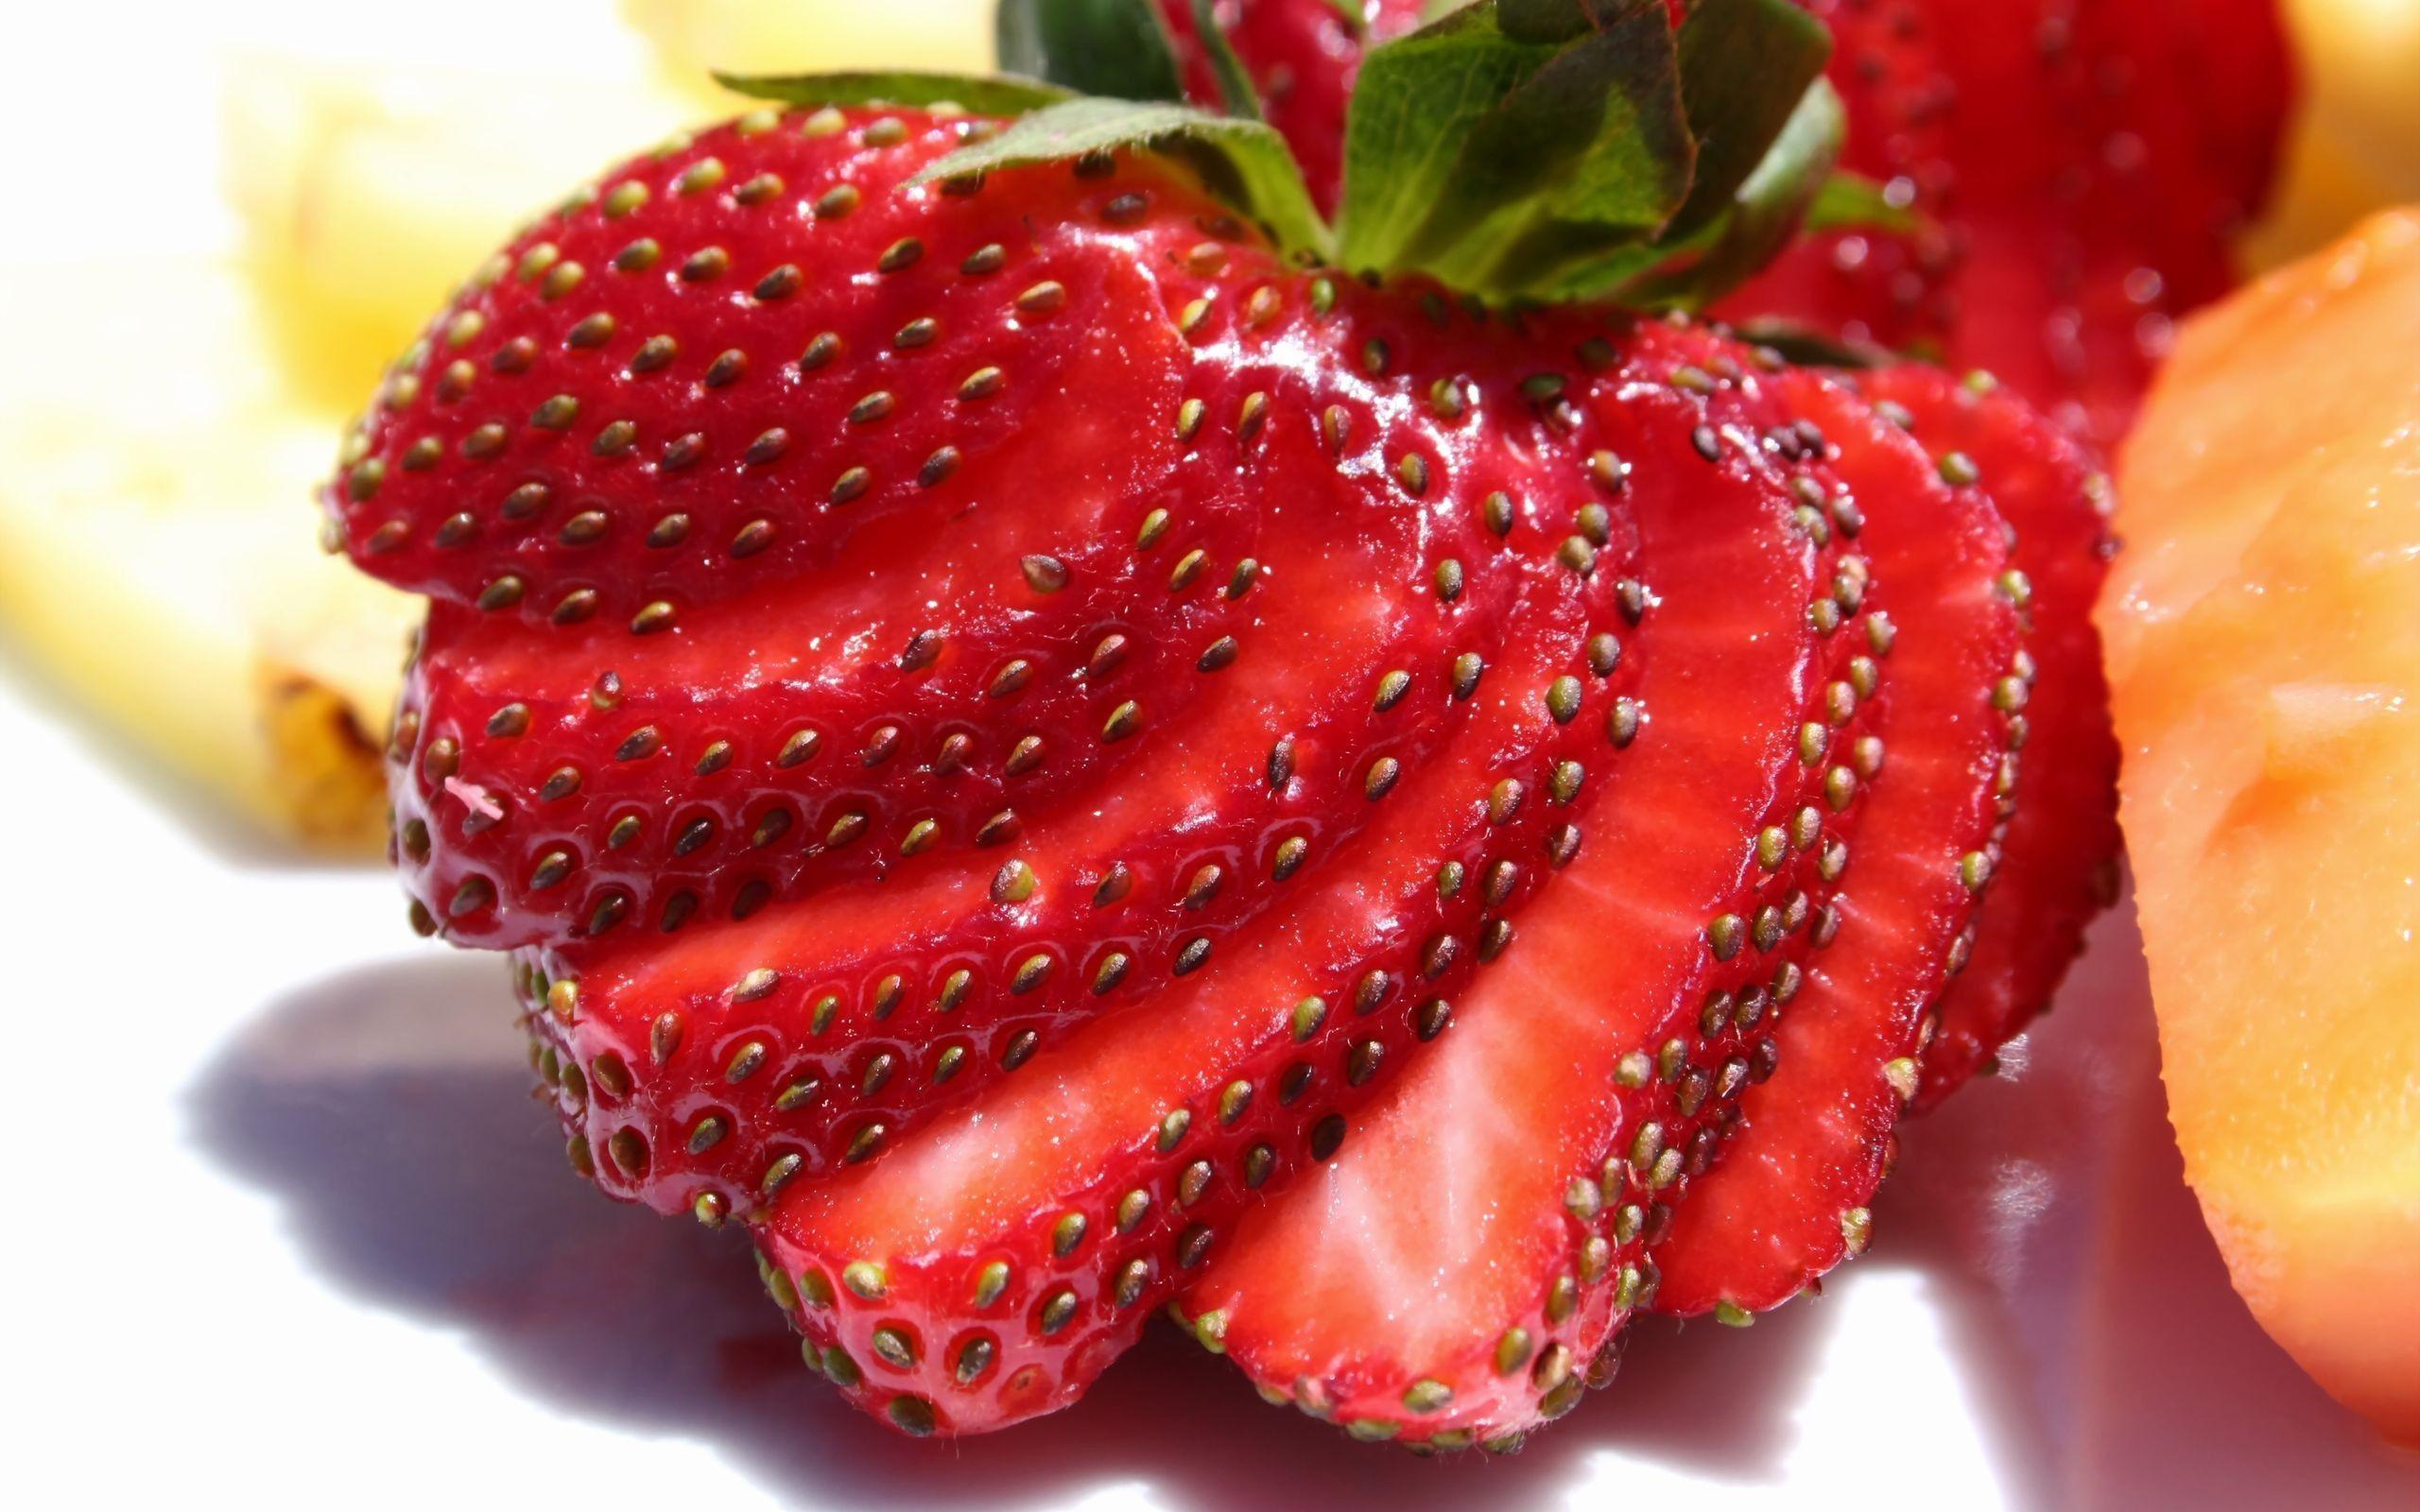 Cute Strawberries Wallpaper 38838 2560x1600 px